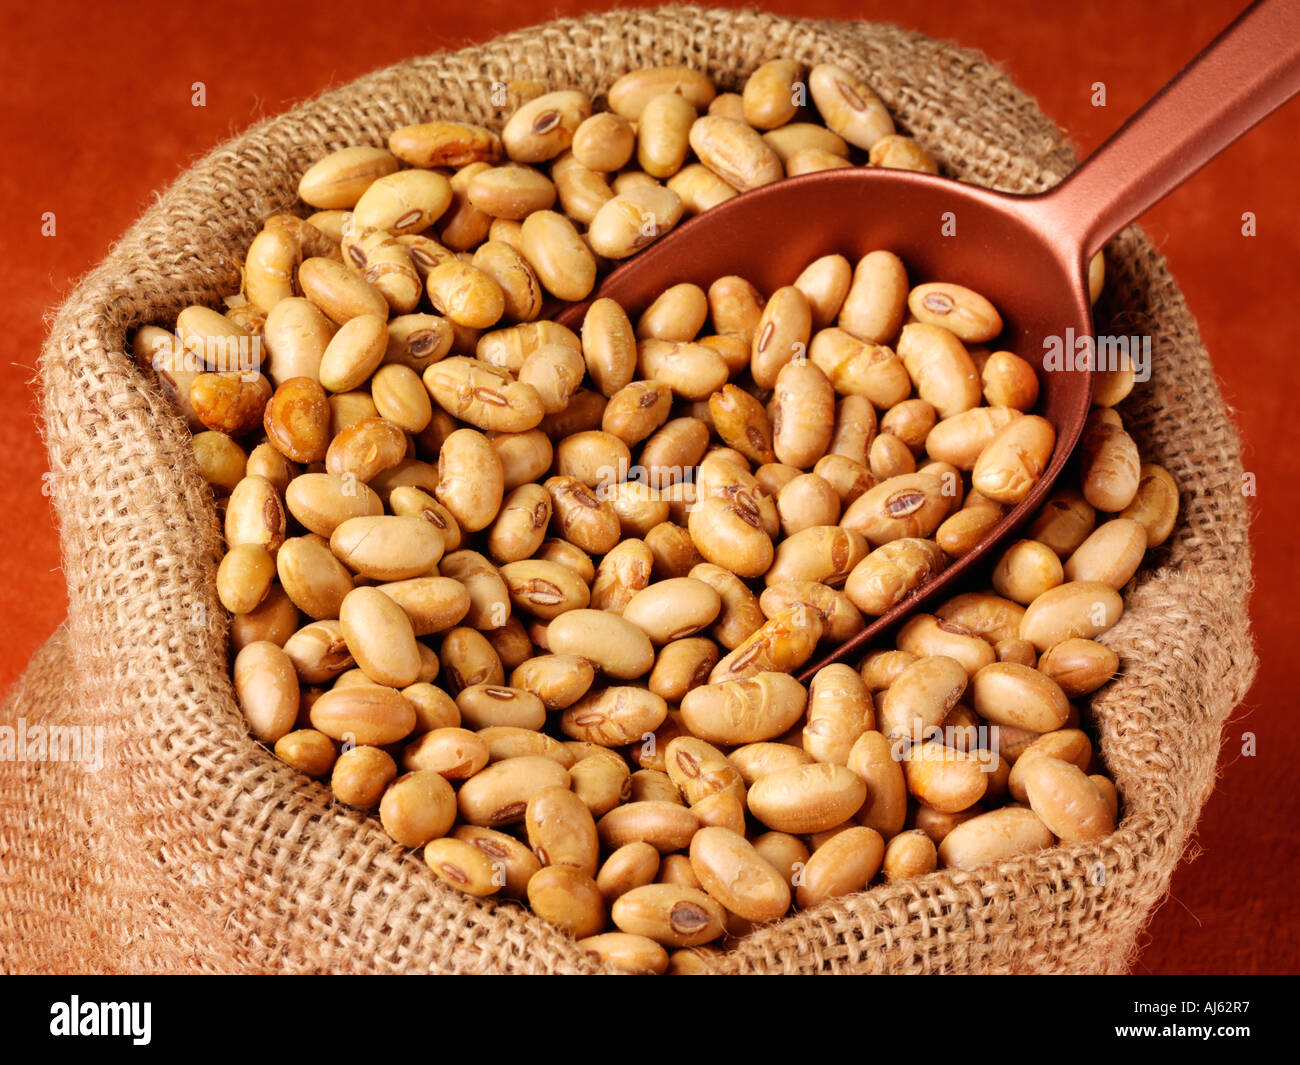 SACK OF ROASTED SOYA NUTS Stock Photo